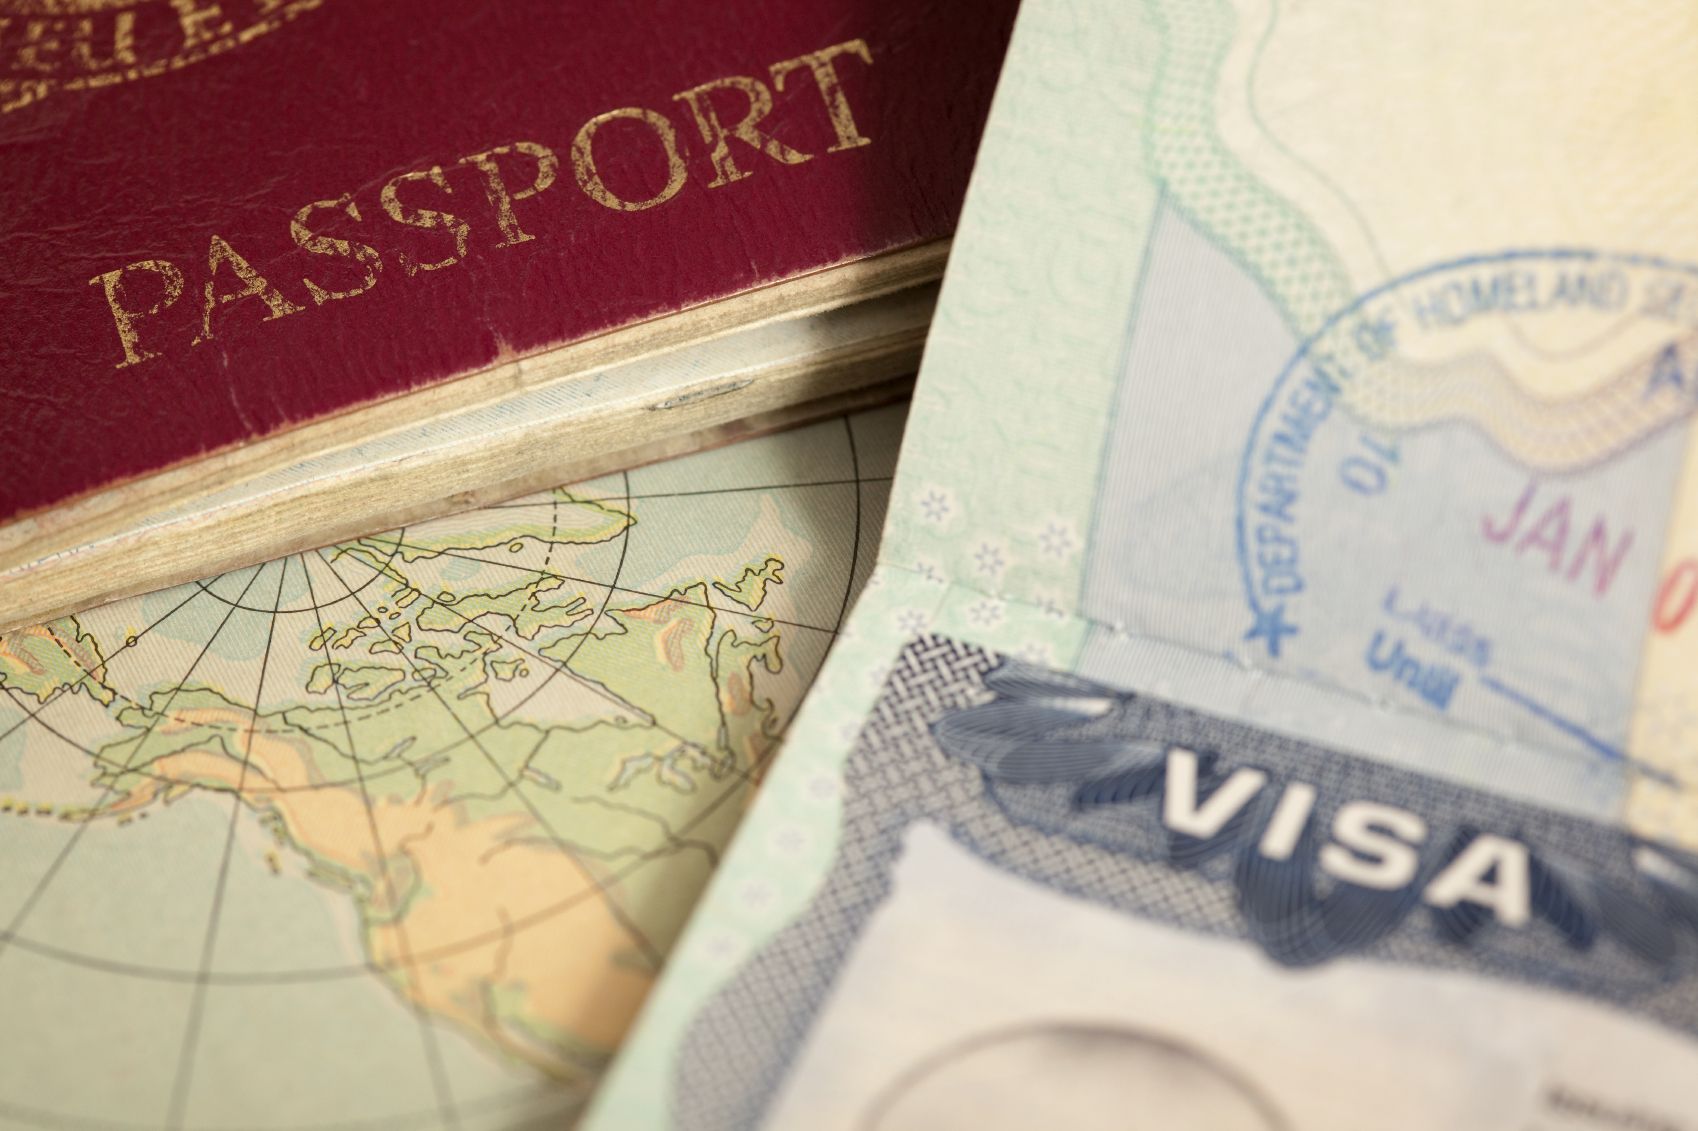 germany tourist visa embassy fees